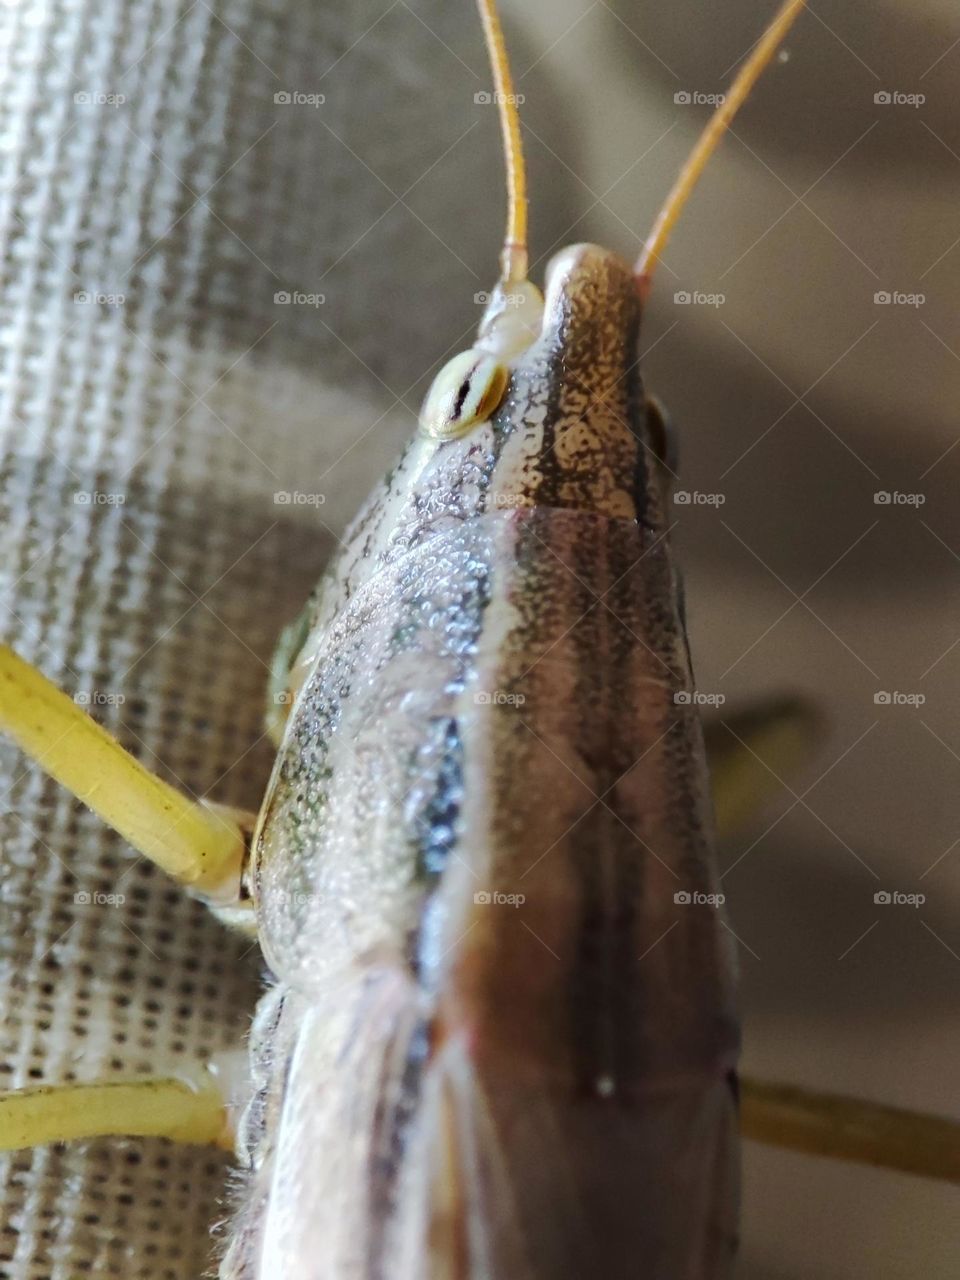 Grasshopper on curtain